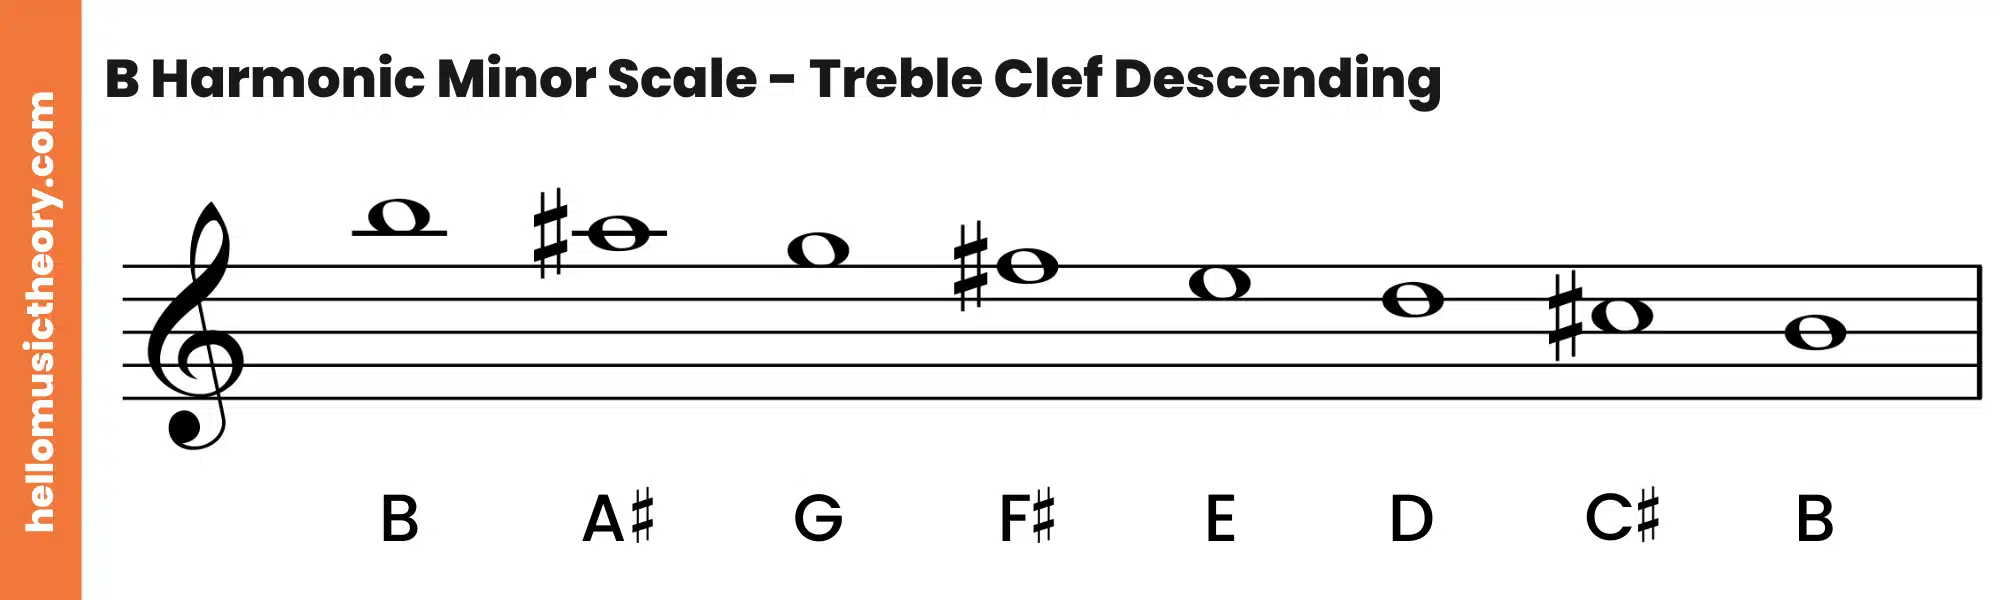 B Harmonic Minor Scale Treble Clef Descending